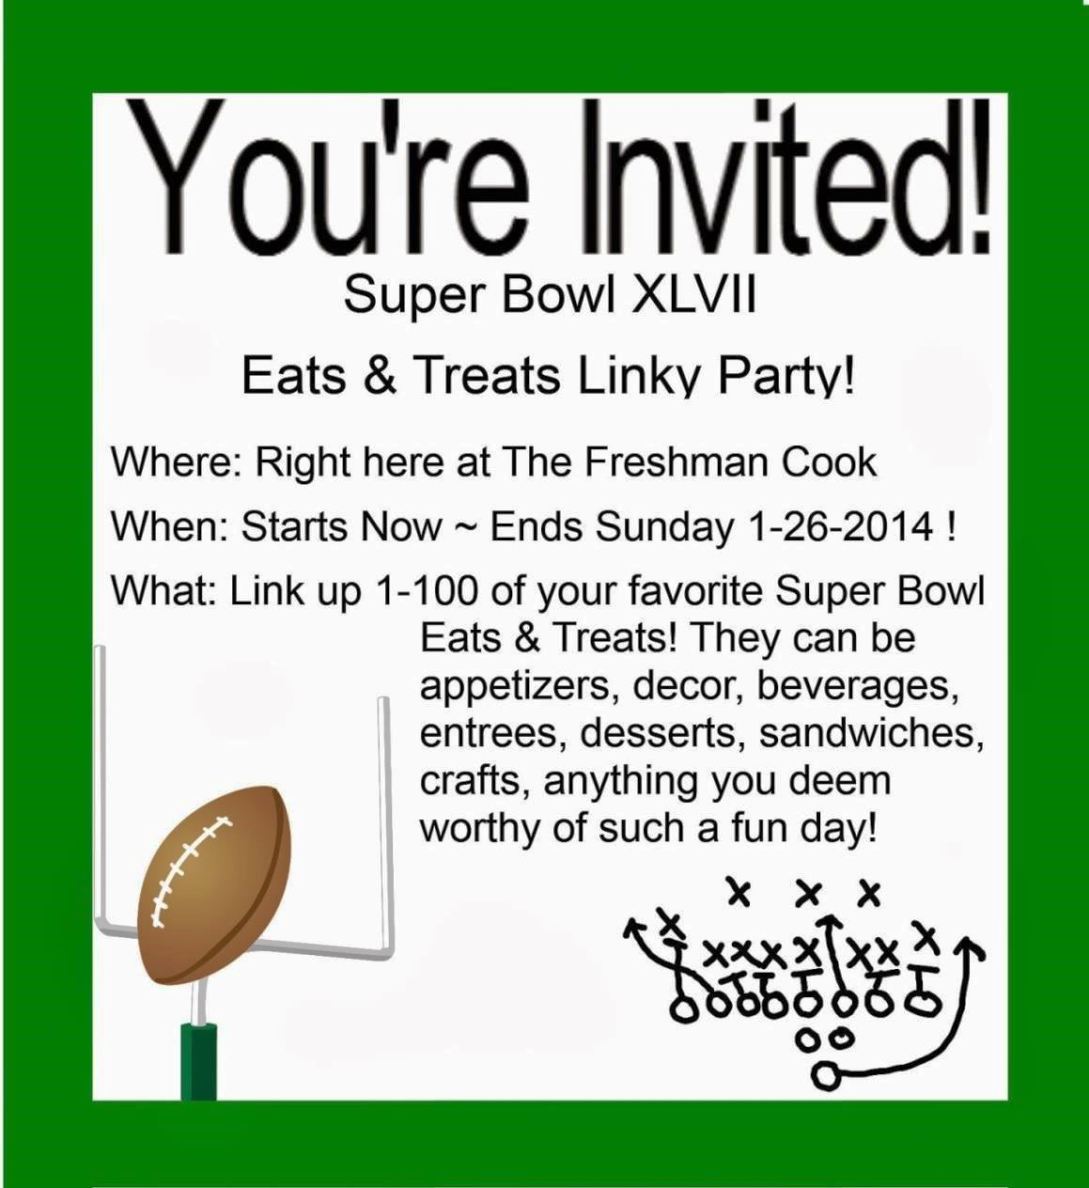 Super Bowl Party Invitation Template SampleTemplatess SampleTemplatess